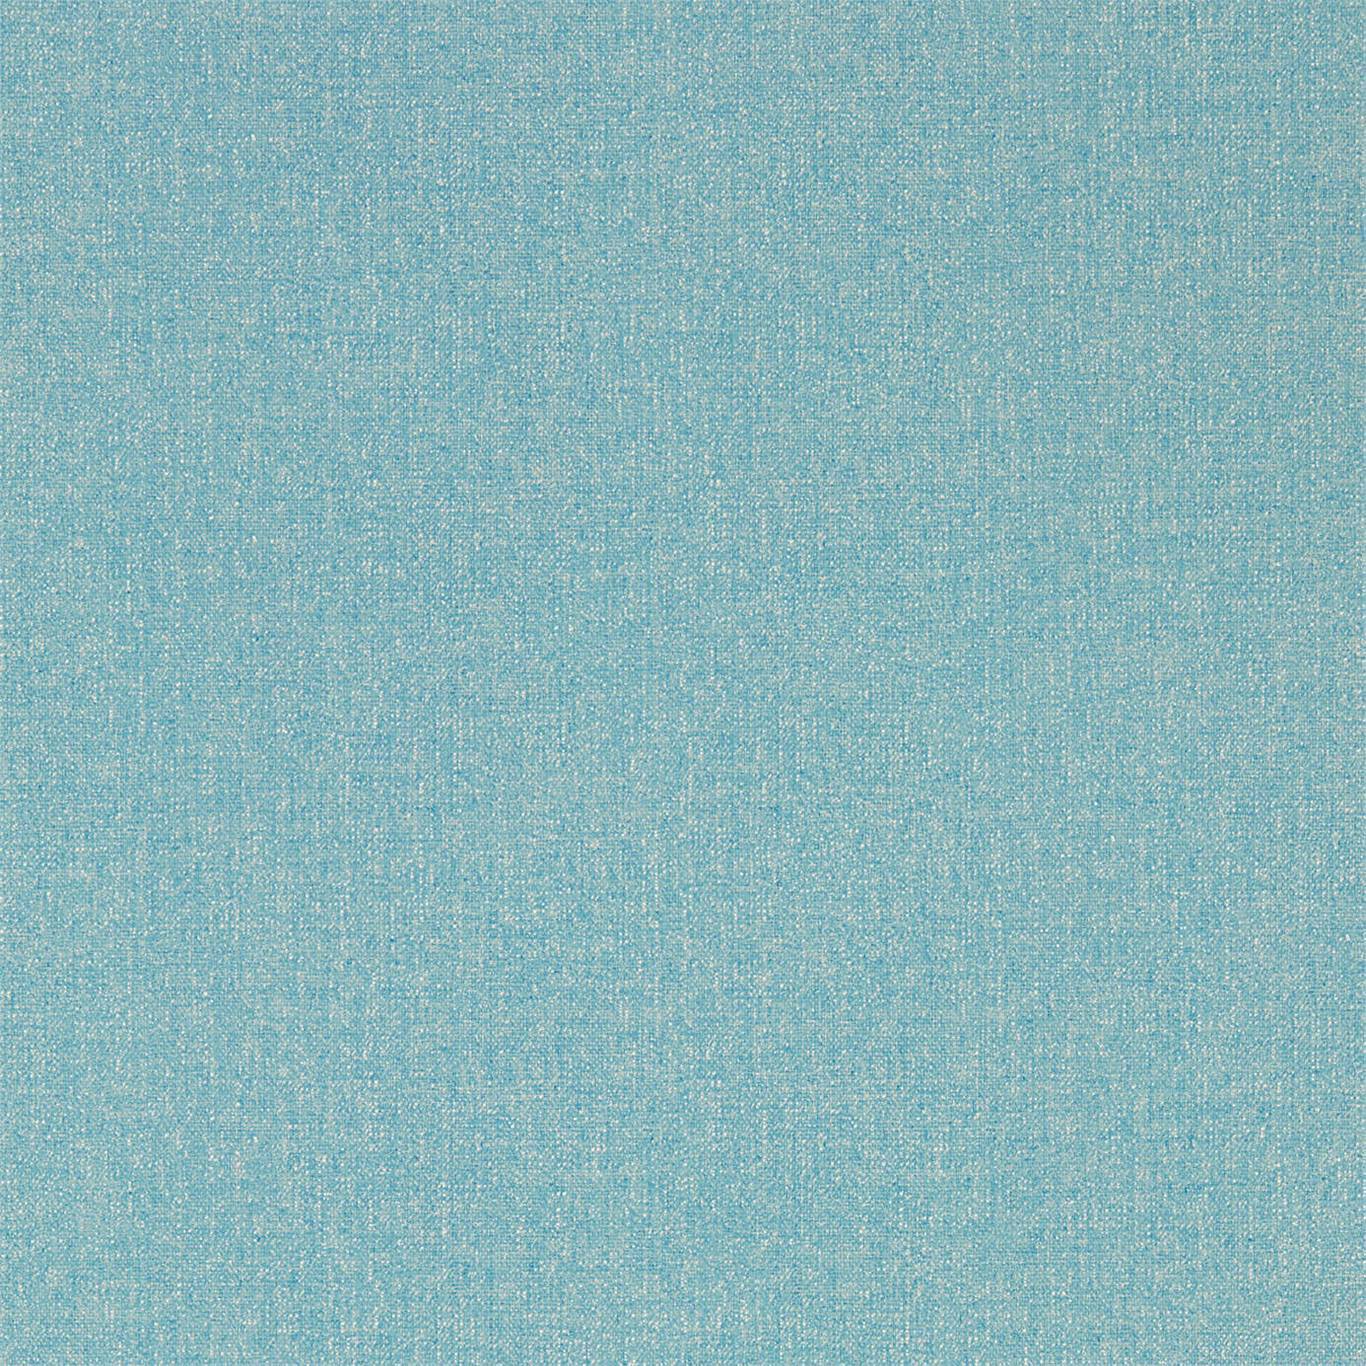 Soho Plain China Blue Wallpaper DCPW216803 by Sanderson